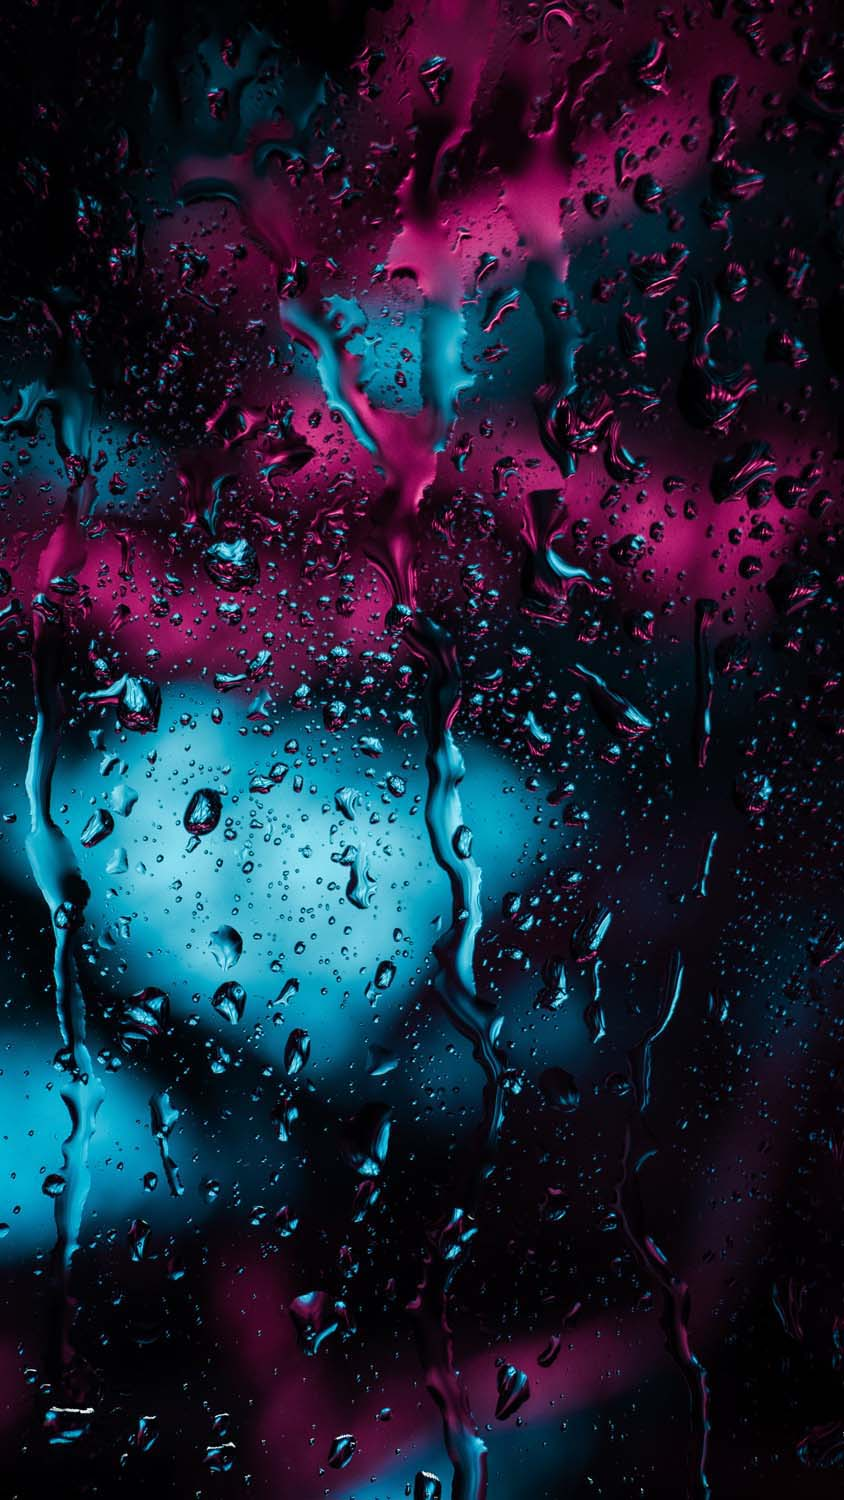 iPhoneXpaperscom  iPhone X wallpaper  vv14waterdrop raincoldbluepatternbackground